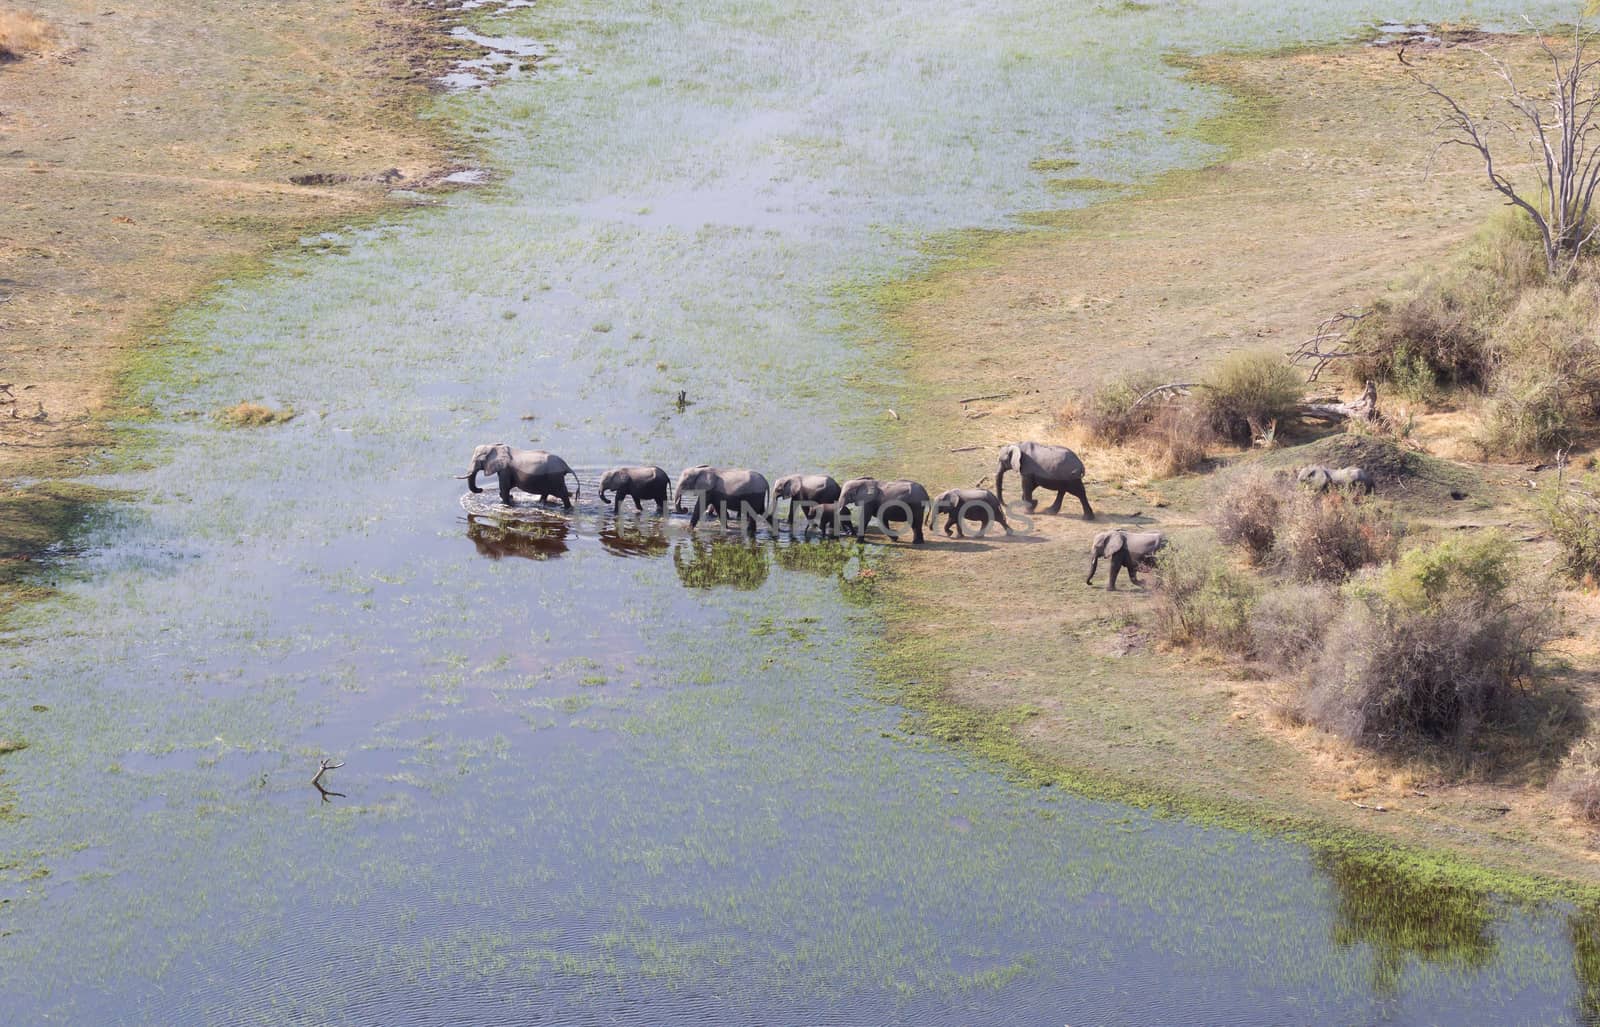 Elephant family crossing water in the Okavango delta (Botswana) by michaklootwijk